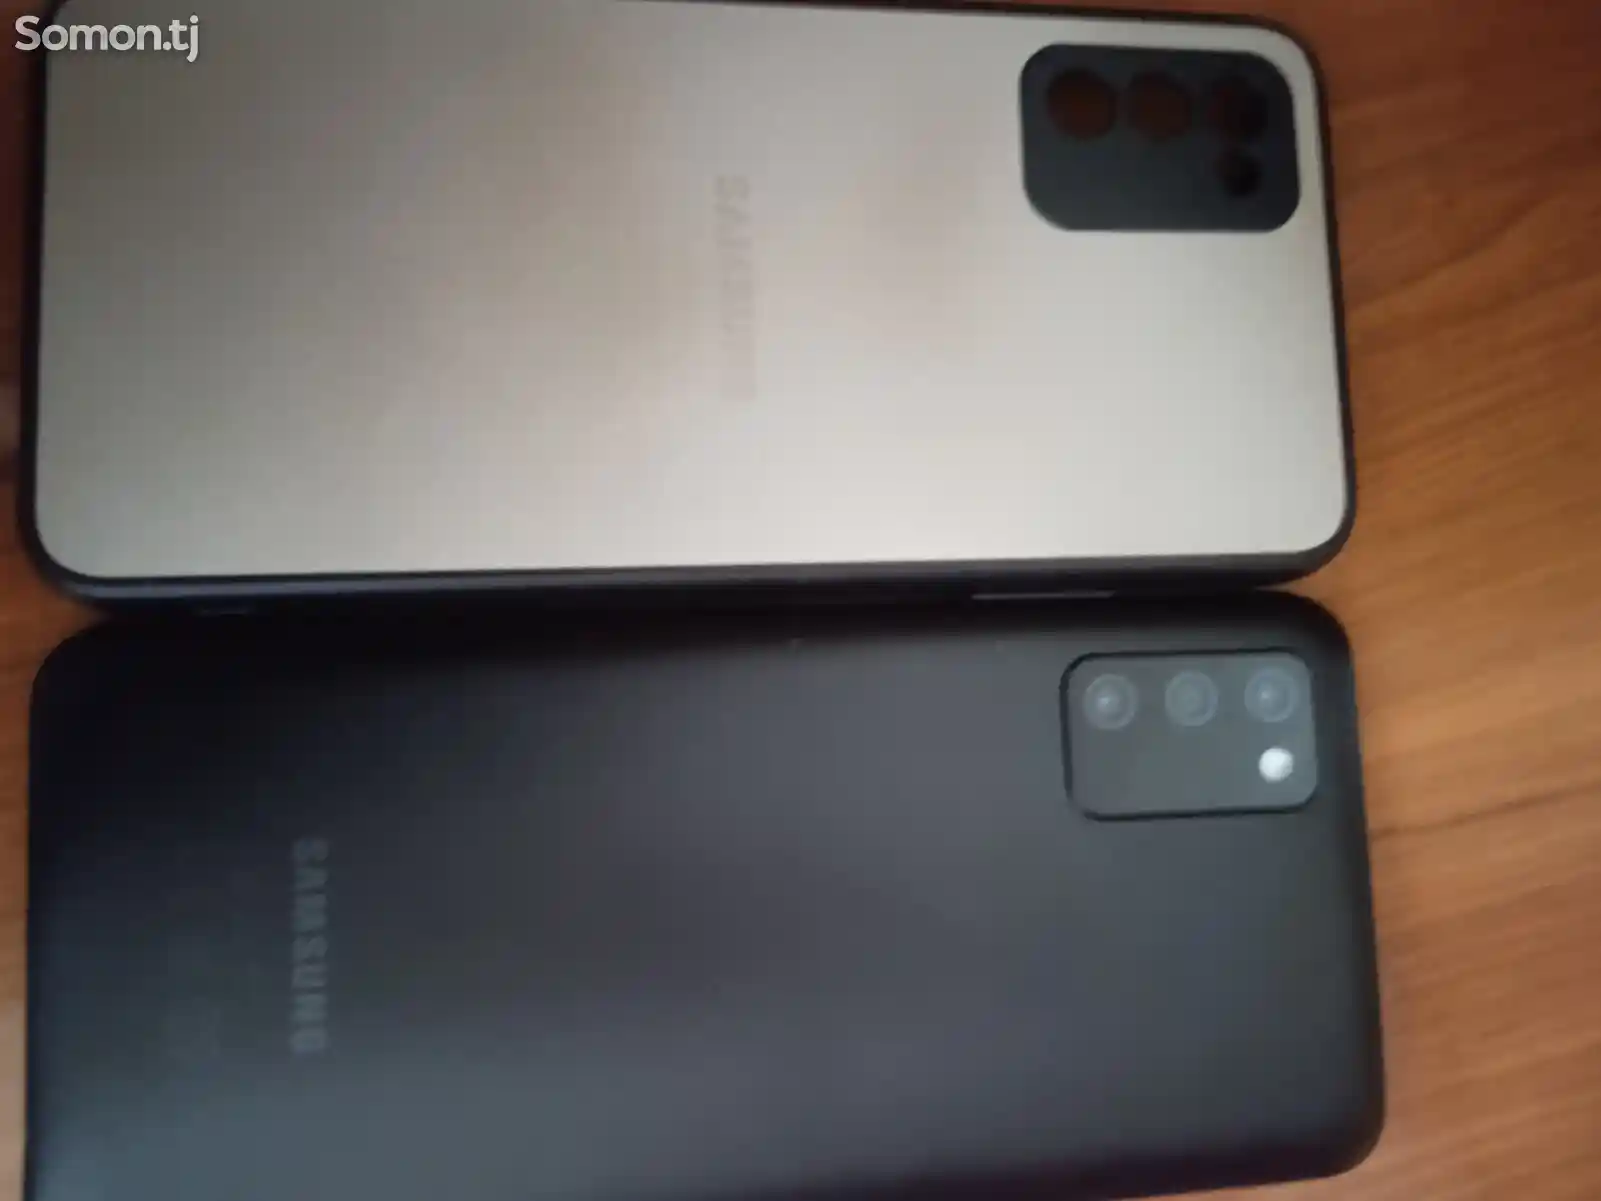 Samsung Galaxy A03s-1